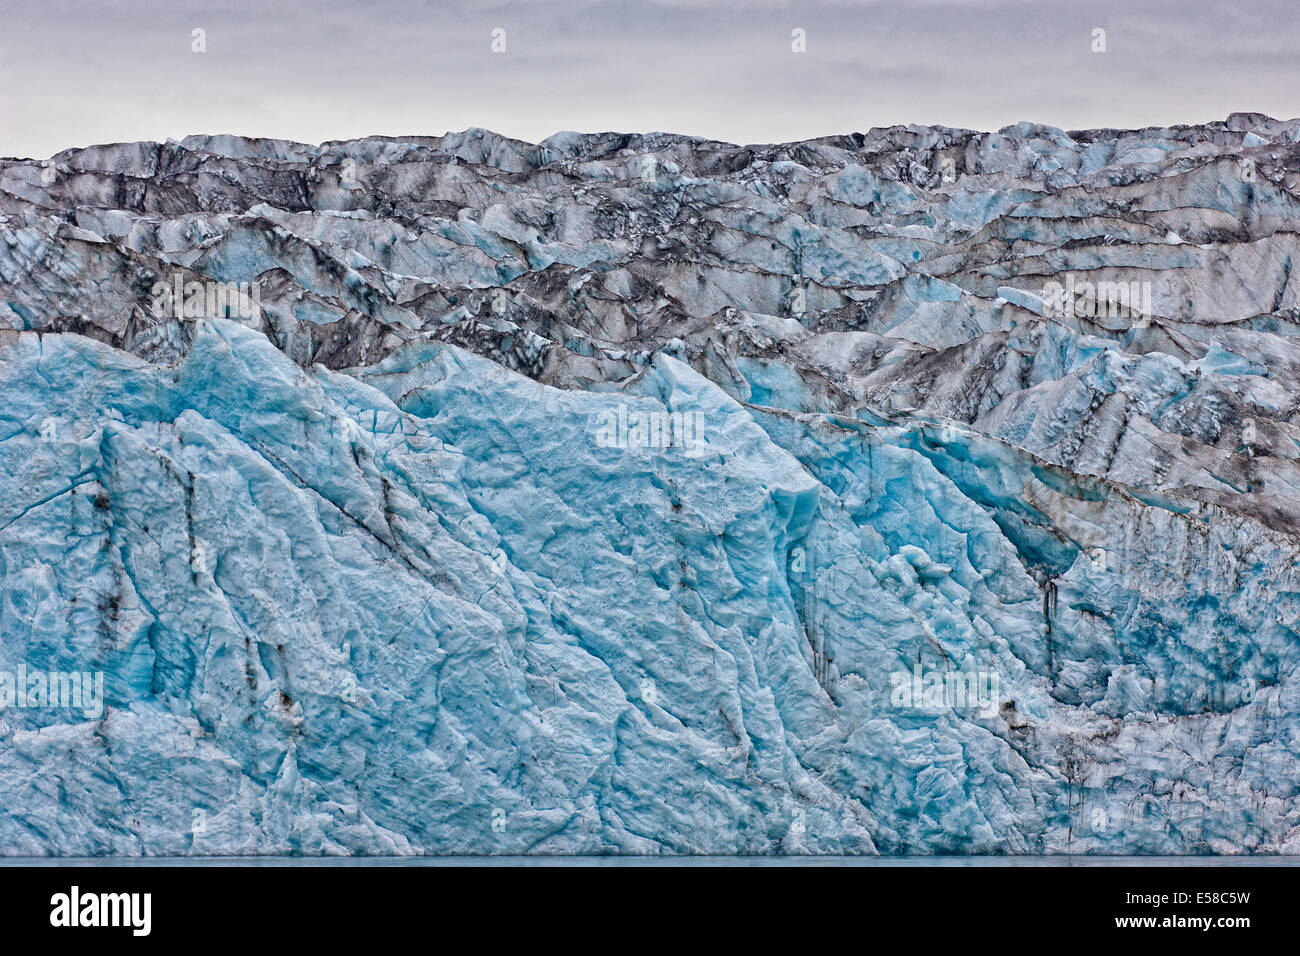 Murs de glace- Jokulsarlon Glacial Lagoon, Breidarmerkurjokull Glacier, calotte de glace, l'Islande Vatnajokull Ash vu dans la glace en raison de volc Banque D'Images